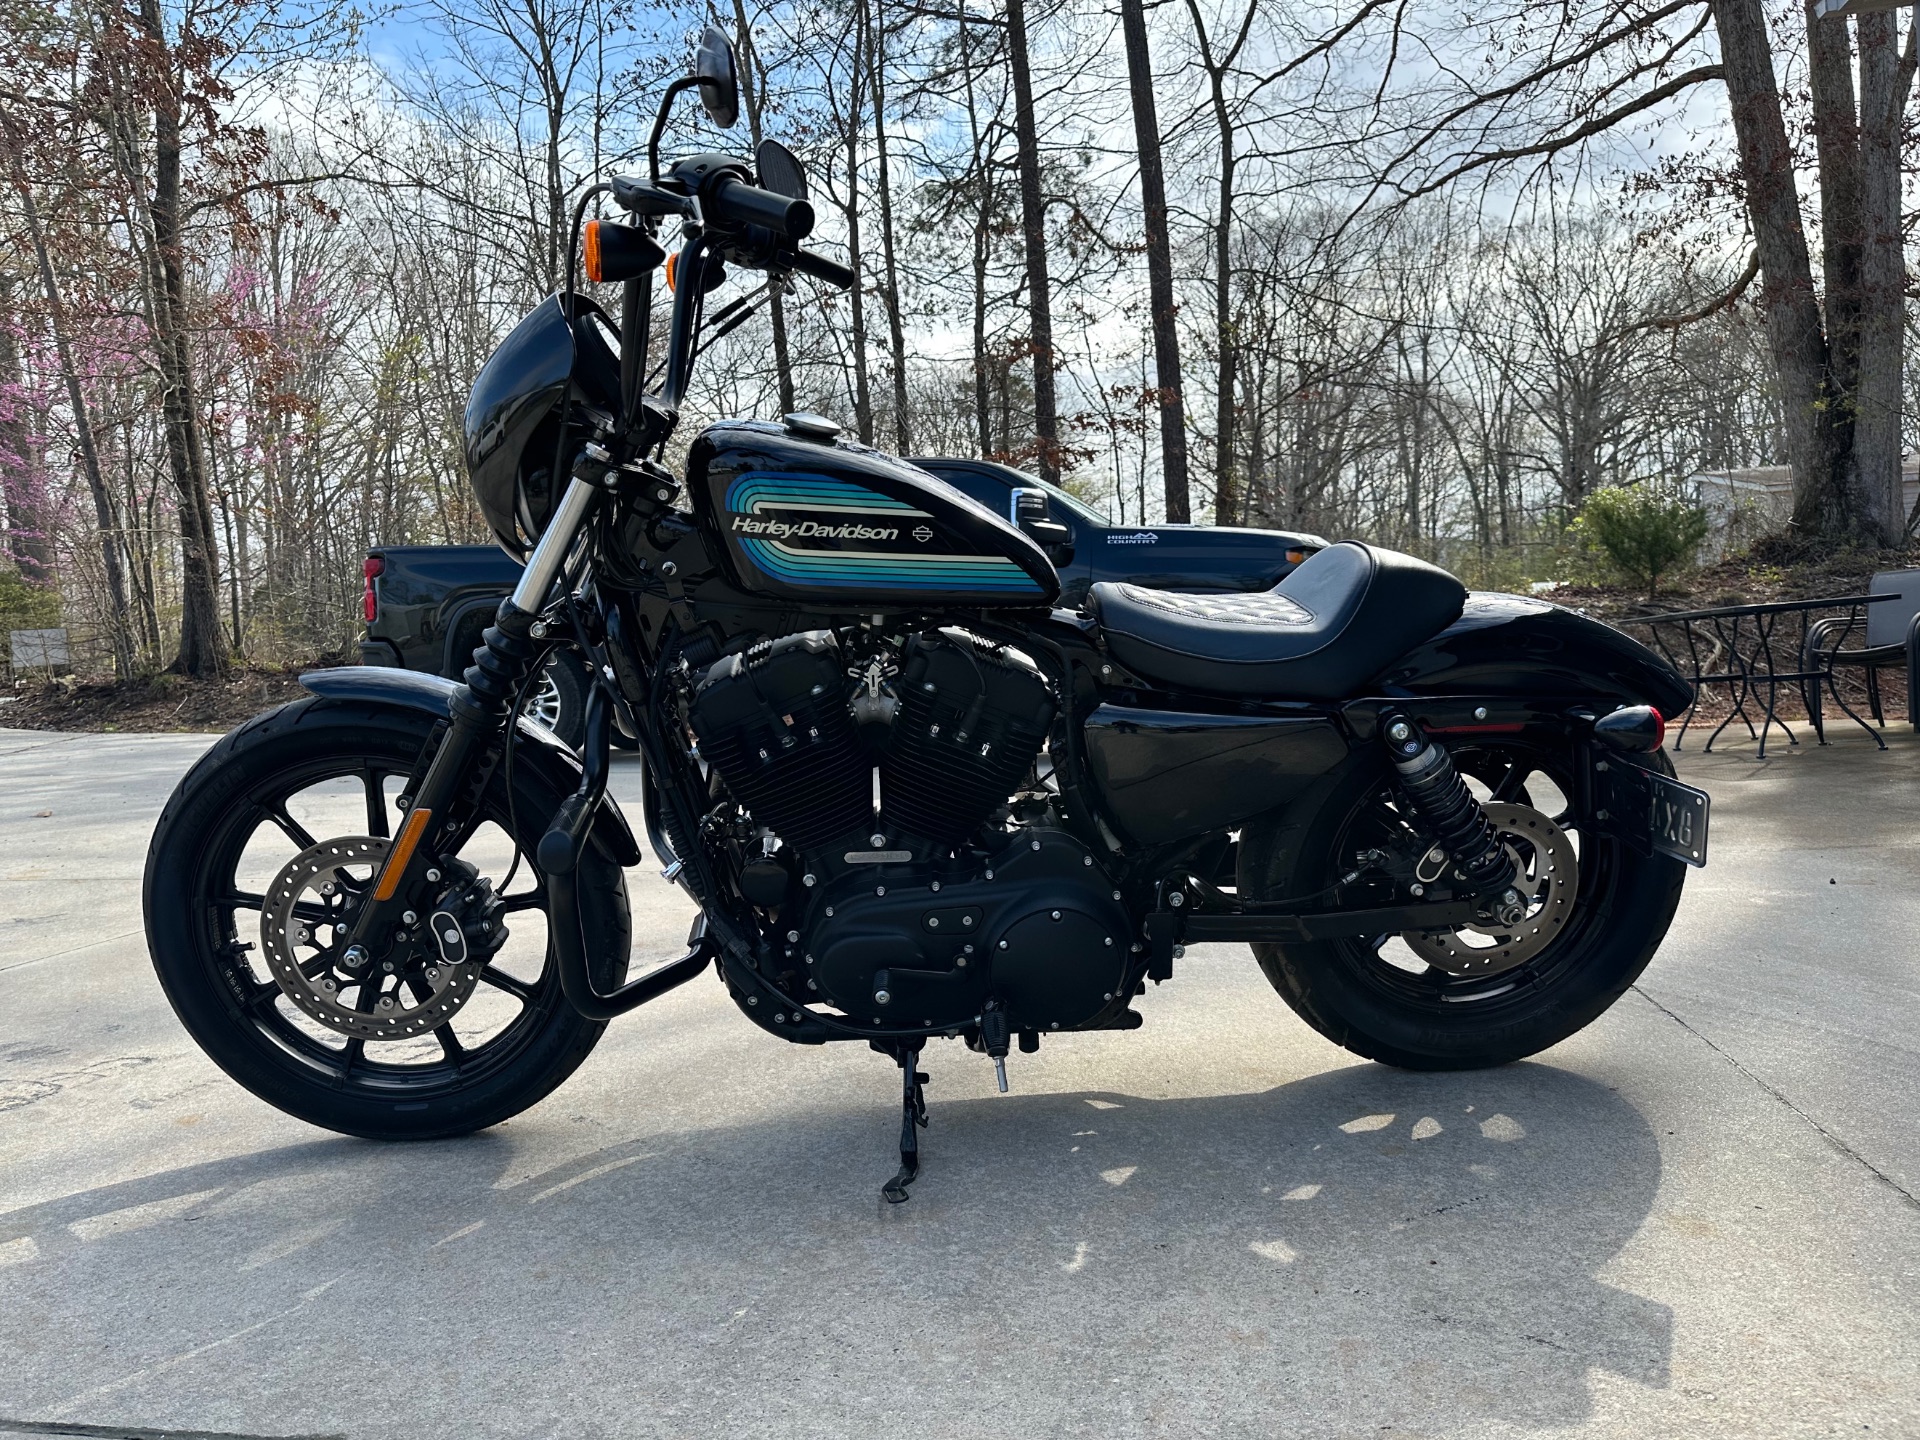 2019 Harley-Davidson Sportster in Lexington, North Carolina - Photo 5